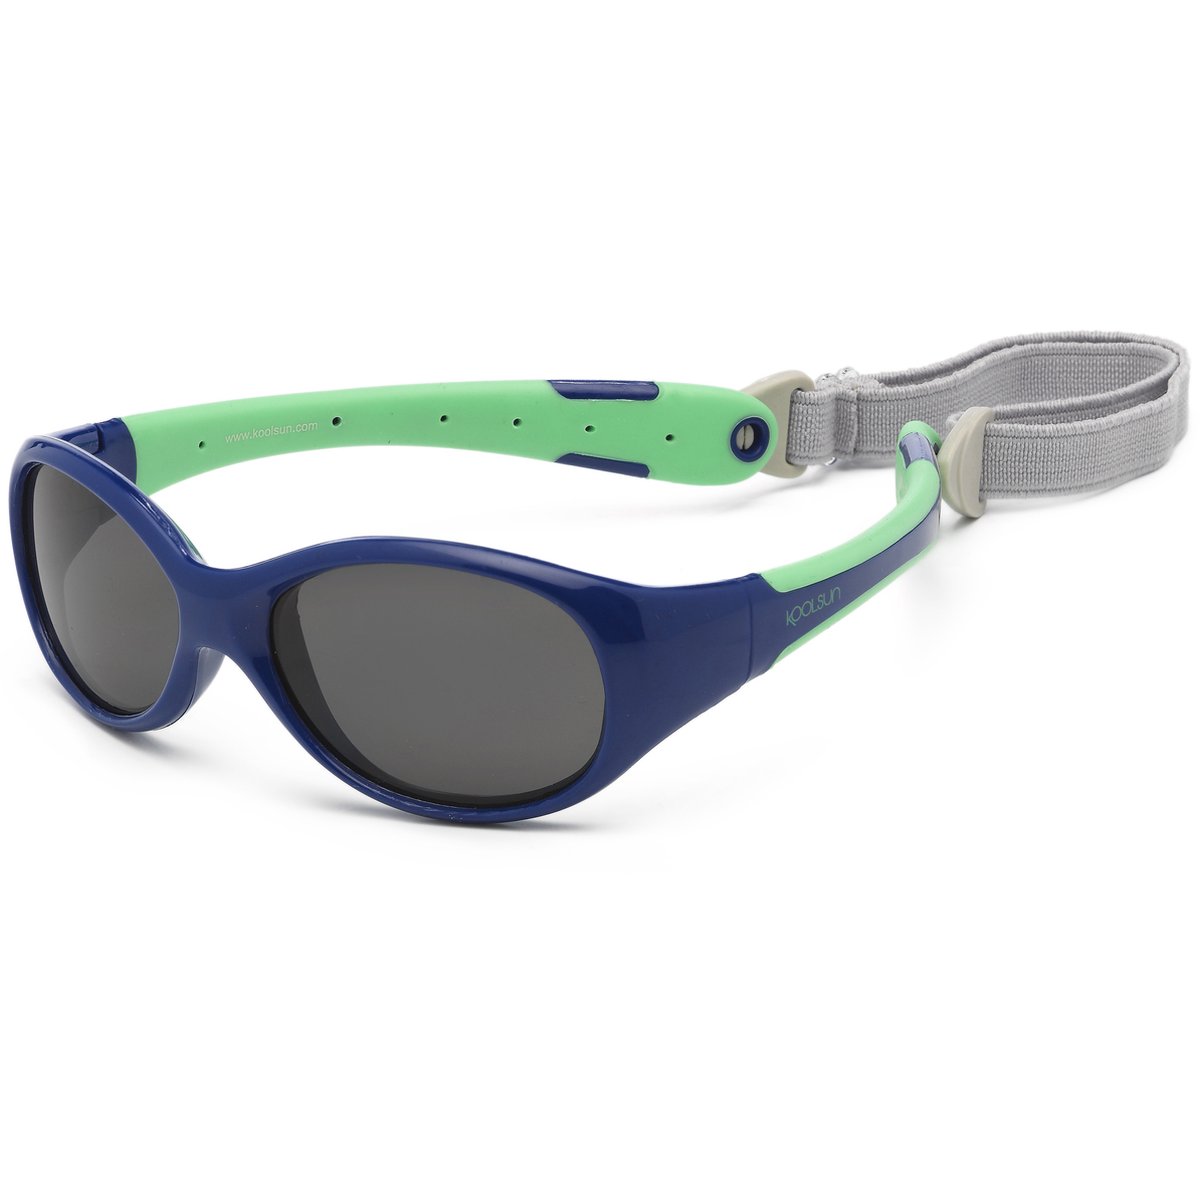 KOOLSUN® Flex - baby zonnebril - Navy Groen - 0-3 jaar - UV400 Categorie 3